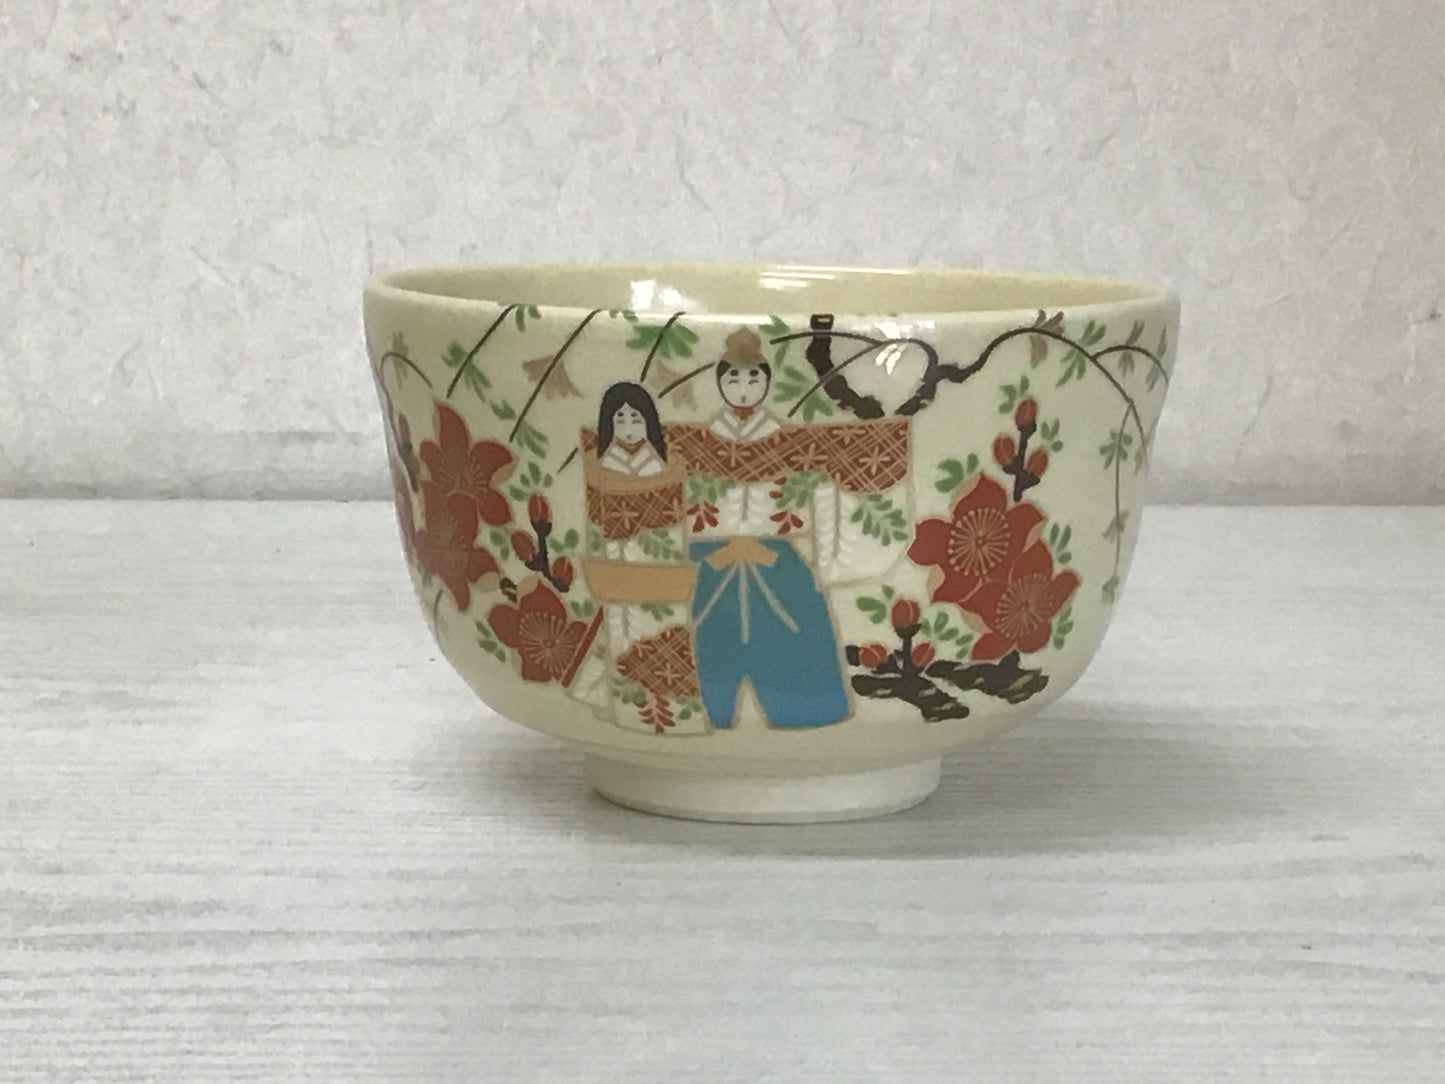 Y1422 CHAWAN Kyo-ware signed box Japanese bowl pottery Japan tea ceremony